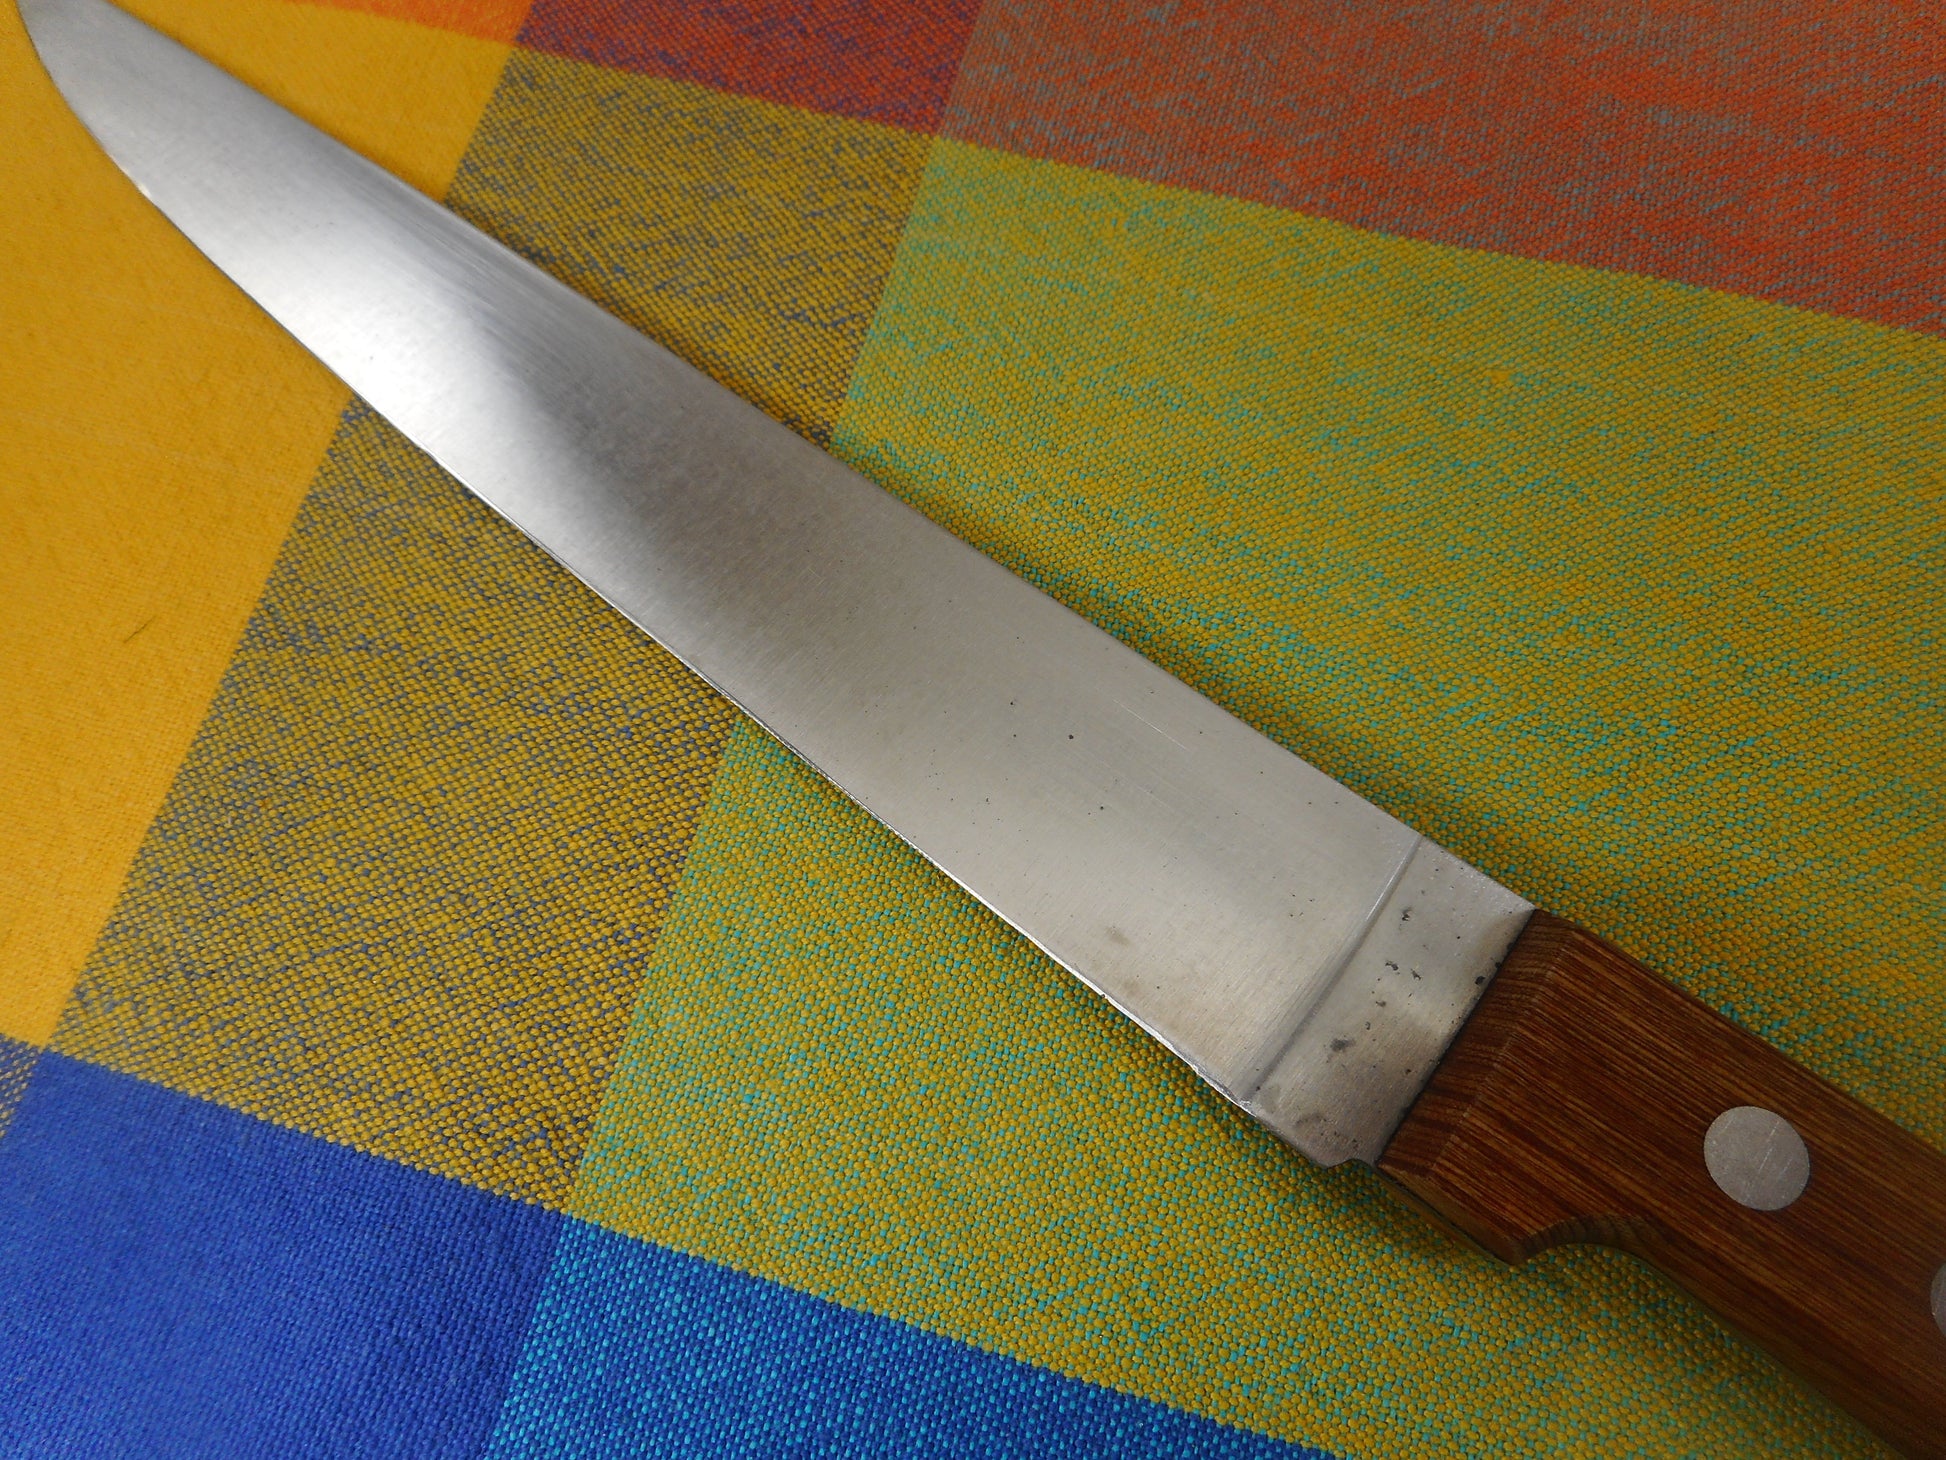 Dansk Gunnar Cyren KItchen Knives - Stainless Slicing Carving - Teak Handle 8" Blade Used